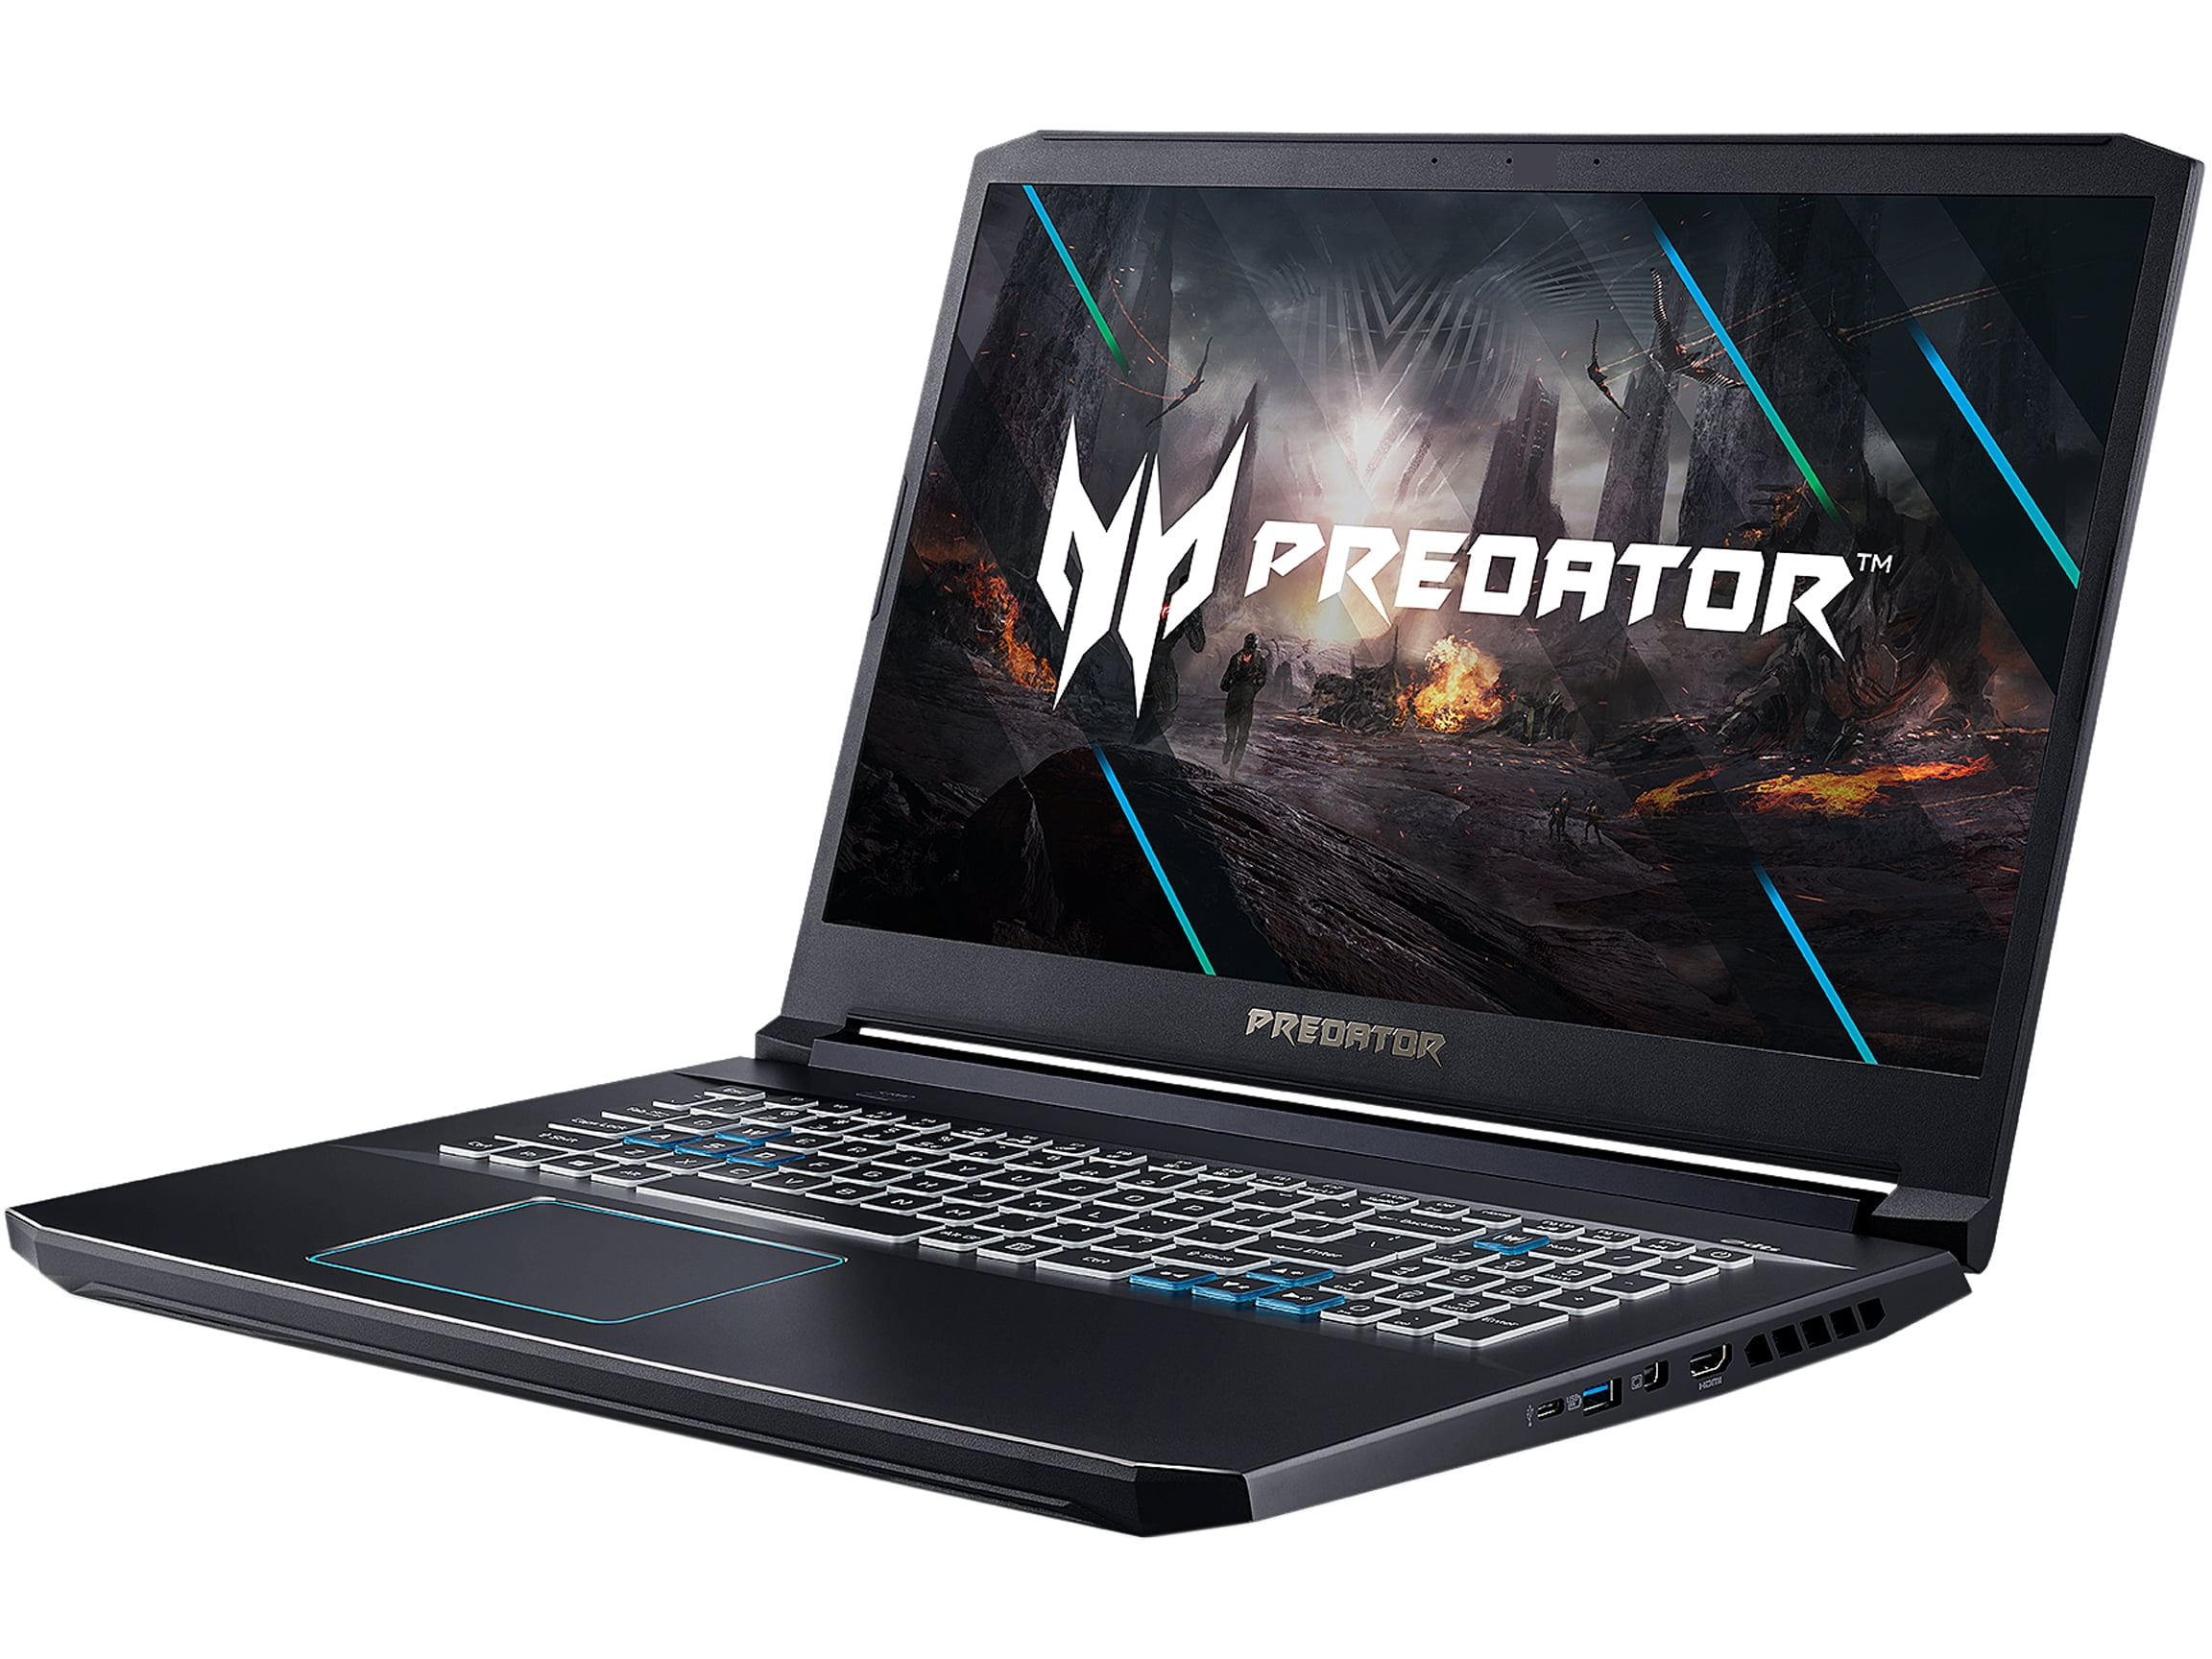 Acer Predator 300 17 Premium Laptop 17.3” FHD 144Hz IPS Display 10th Gen Intel Hexa-Core i7-10750H 32GB DDR4 512GB SSD GeForce RTX 2060 6GB Backlit Keyboard USB-C WiFi6 Win10 -